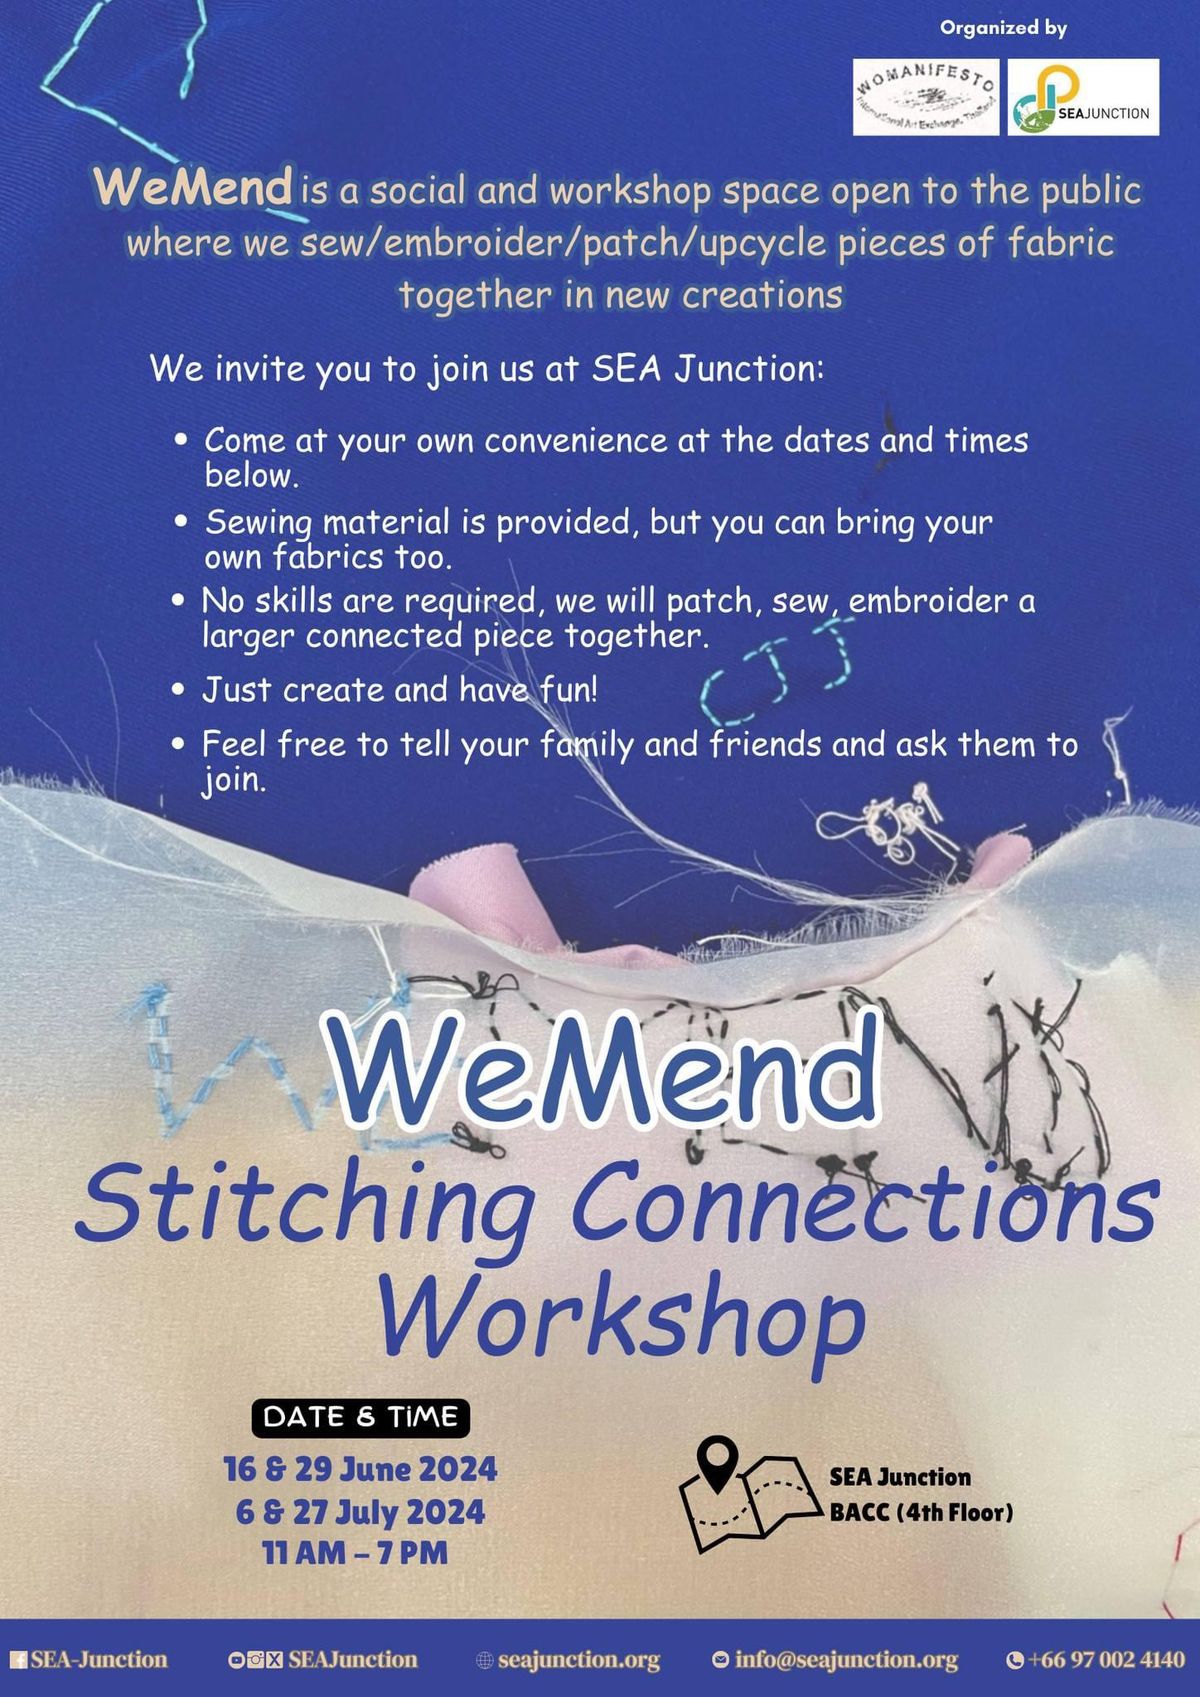 WeMend: Stitching Connections Workshop